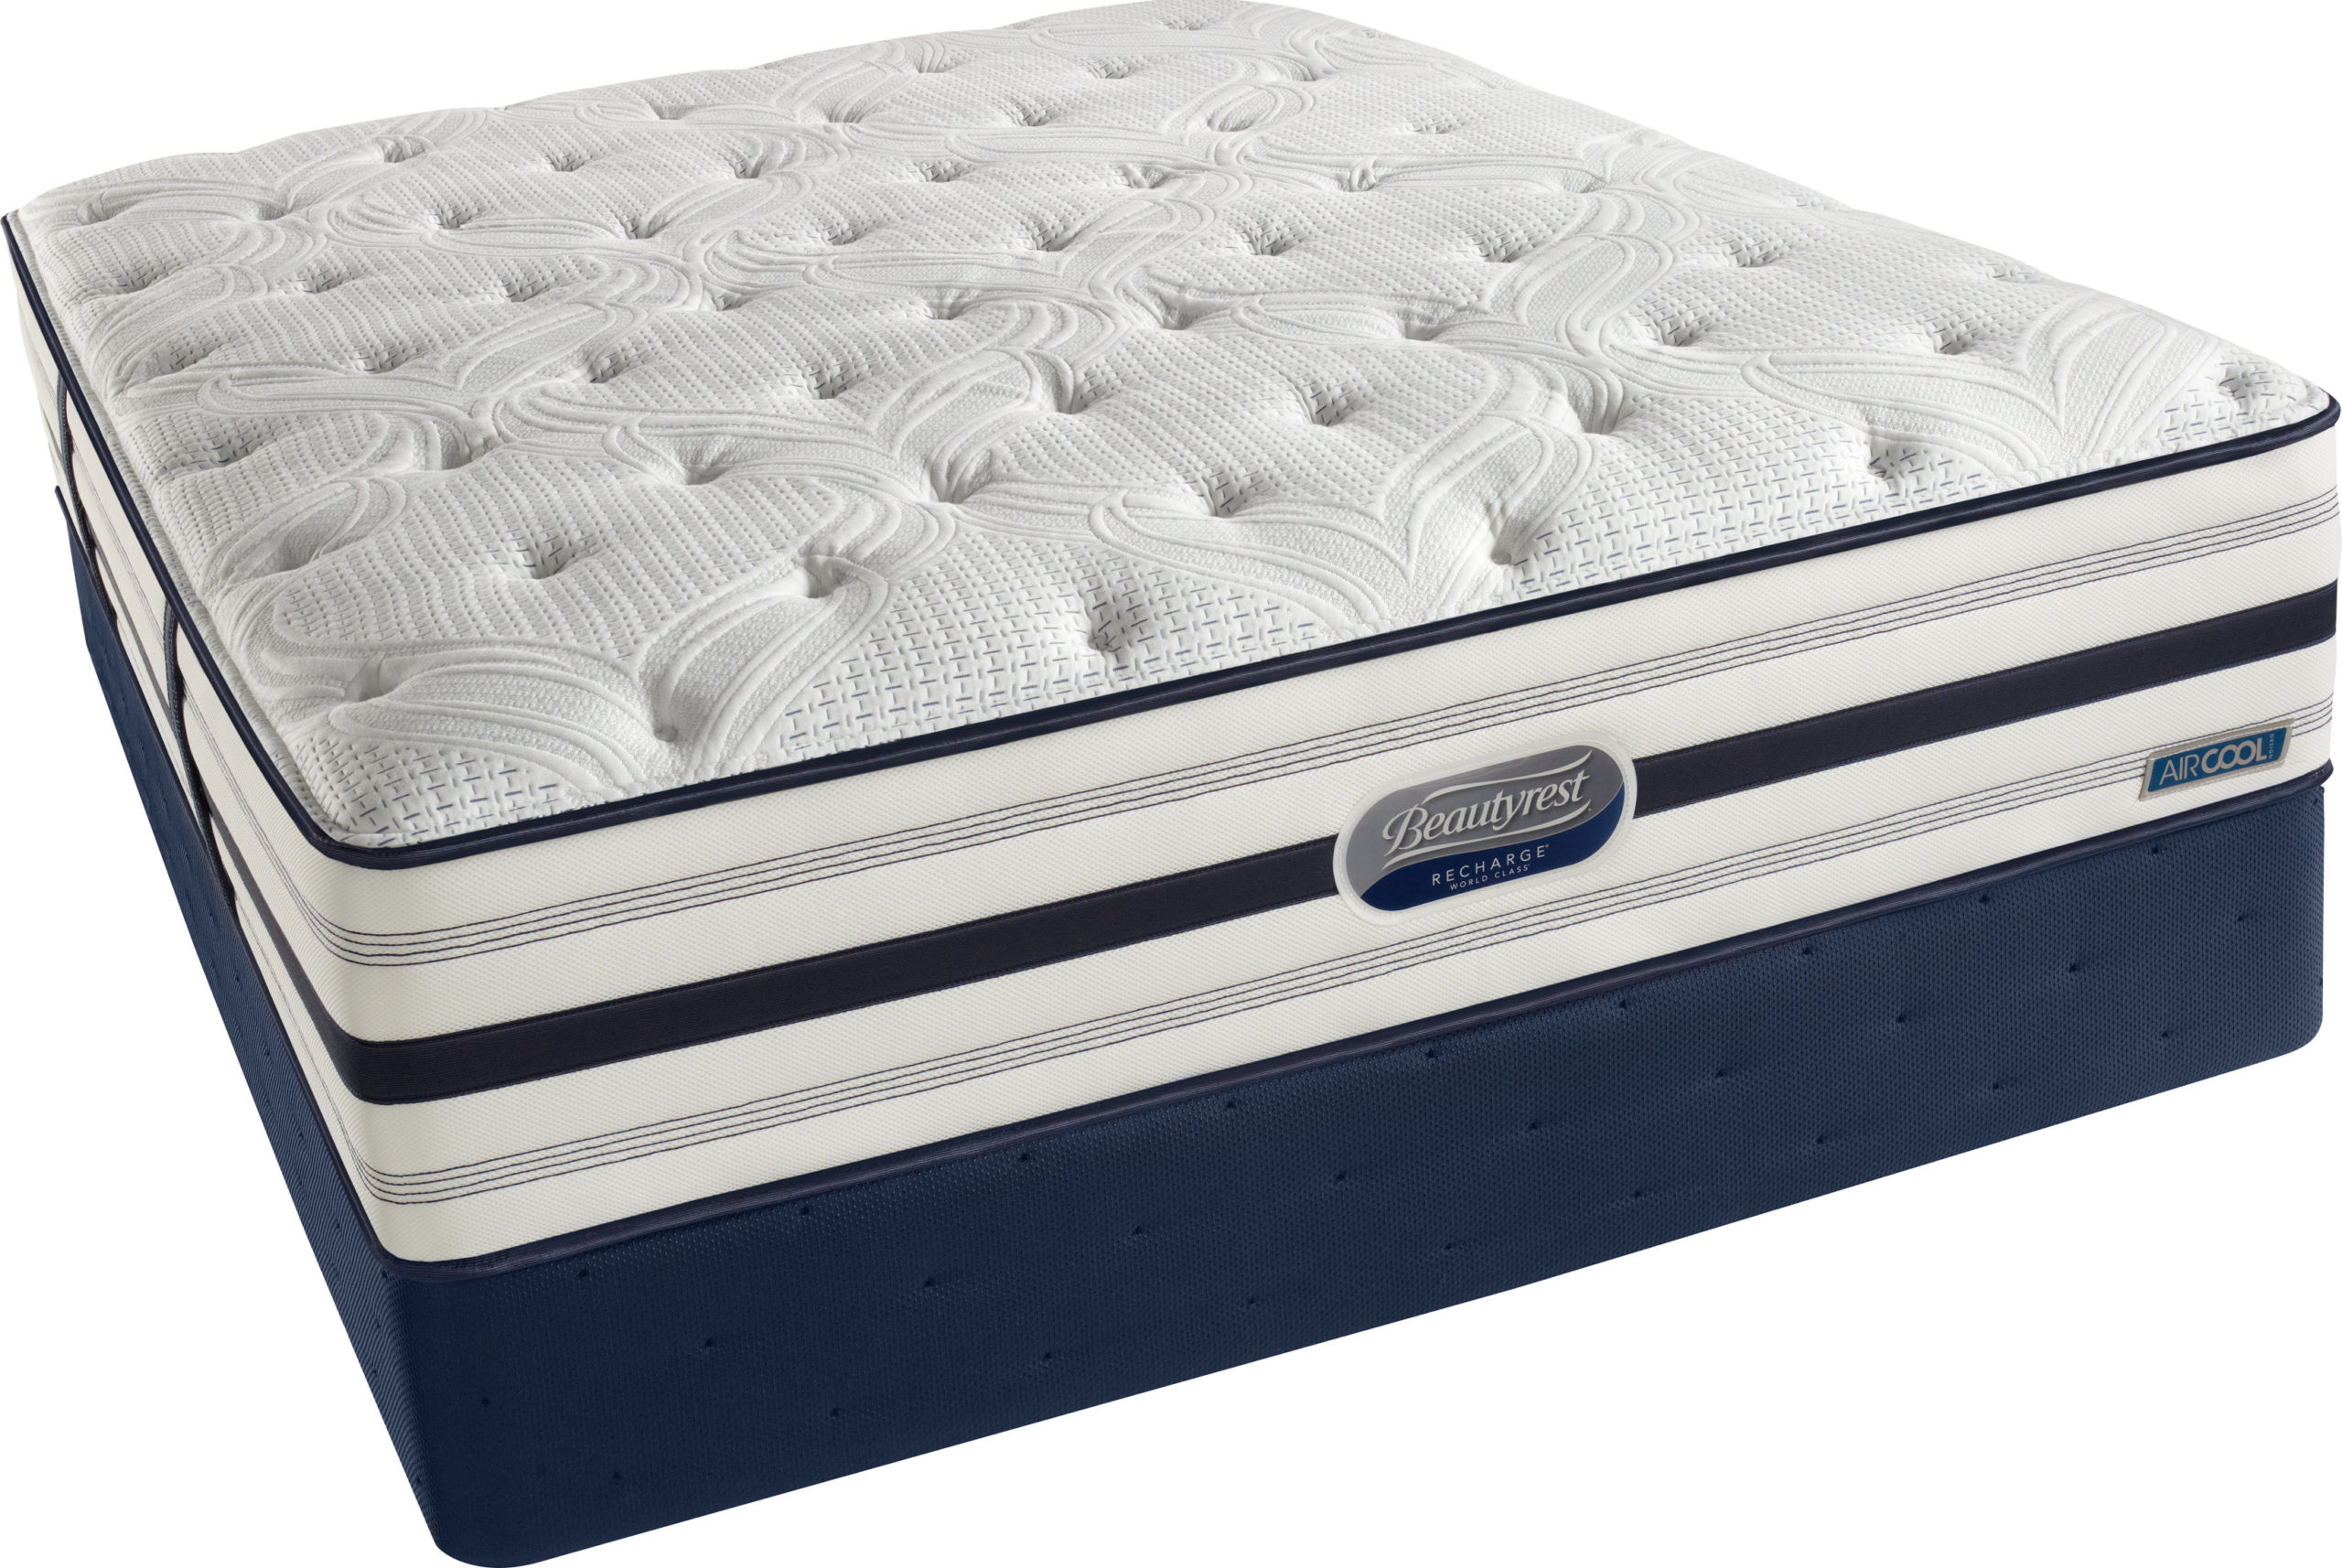 disney deluxe plush mattress by beautyrest